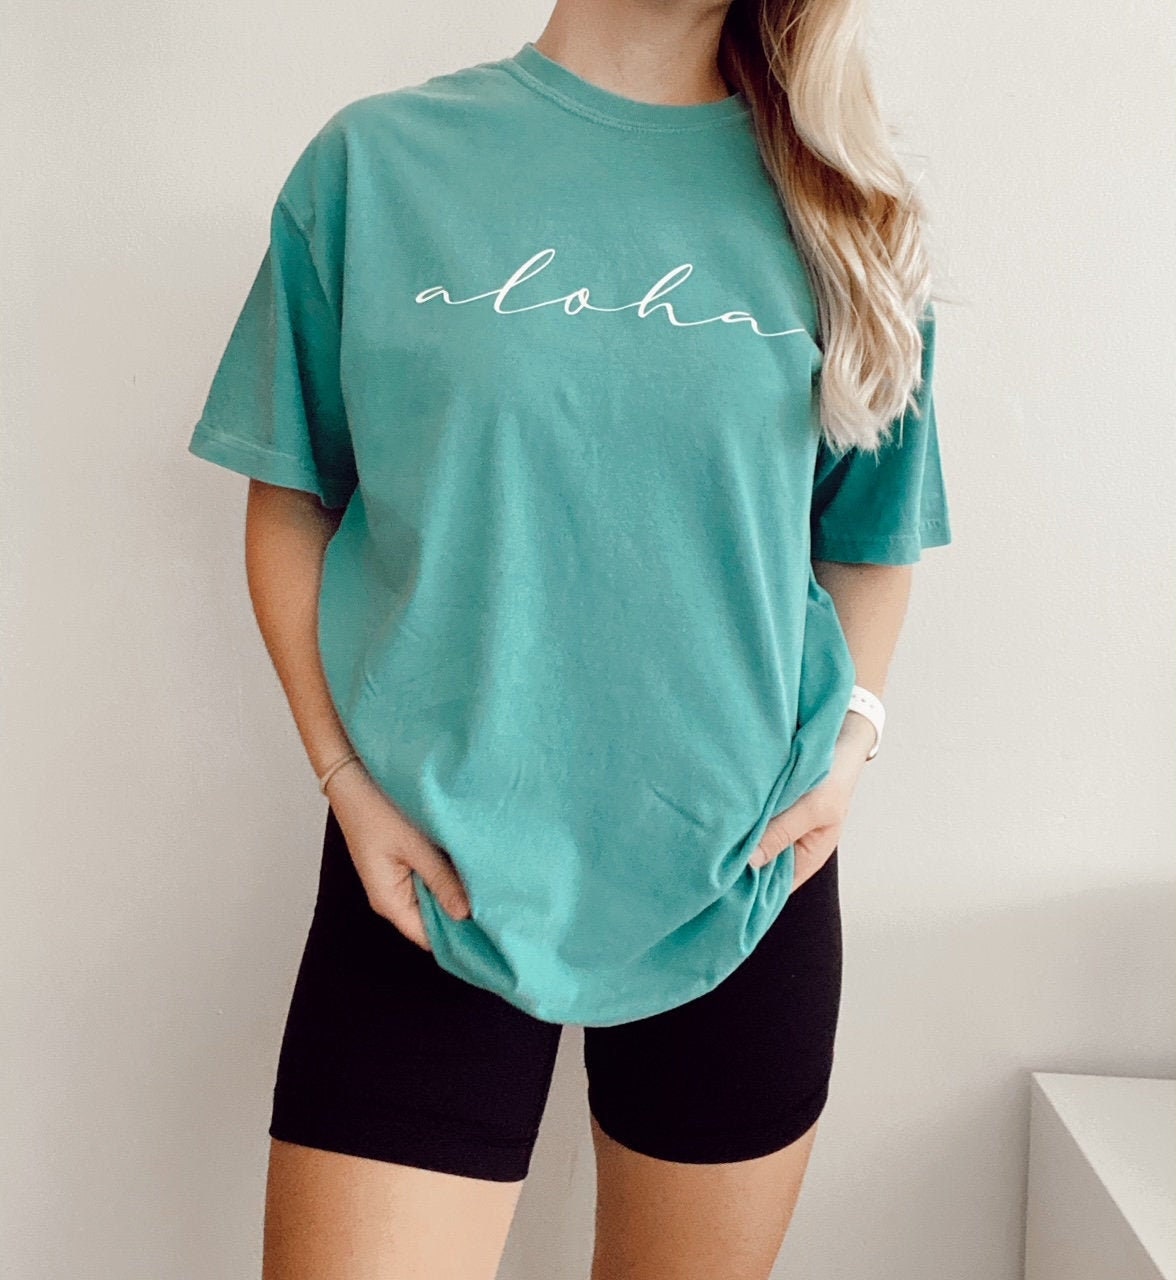 Aloha T-Shirt | Comfort Colors Tee Comfy Unisex Women's Oversized Seafoam Size M |Beach